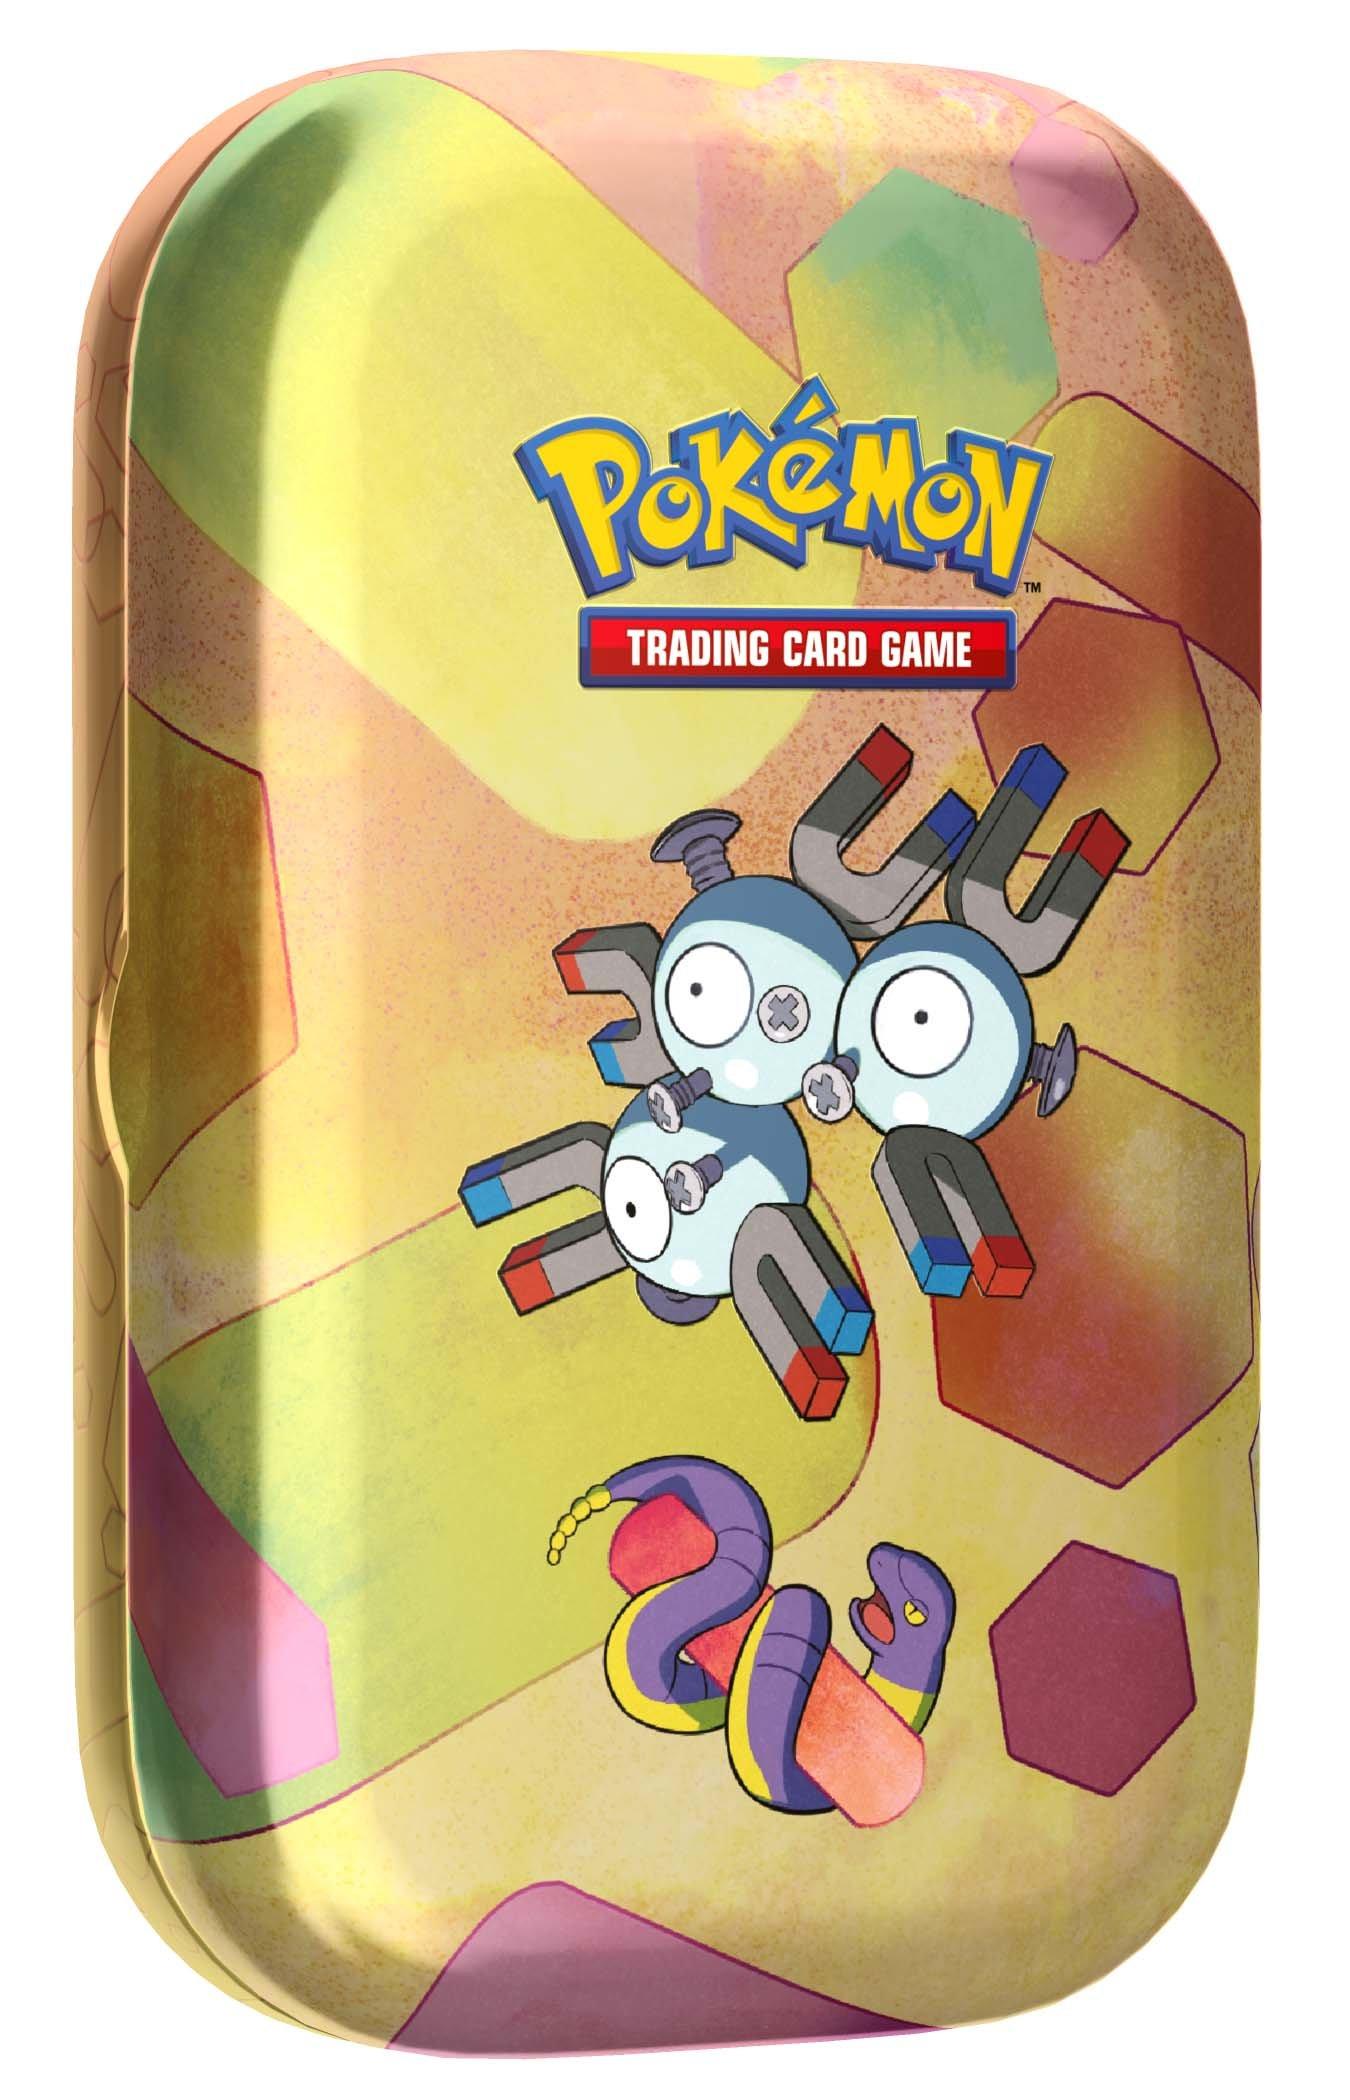 Pokémon Display Mini Tins 151